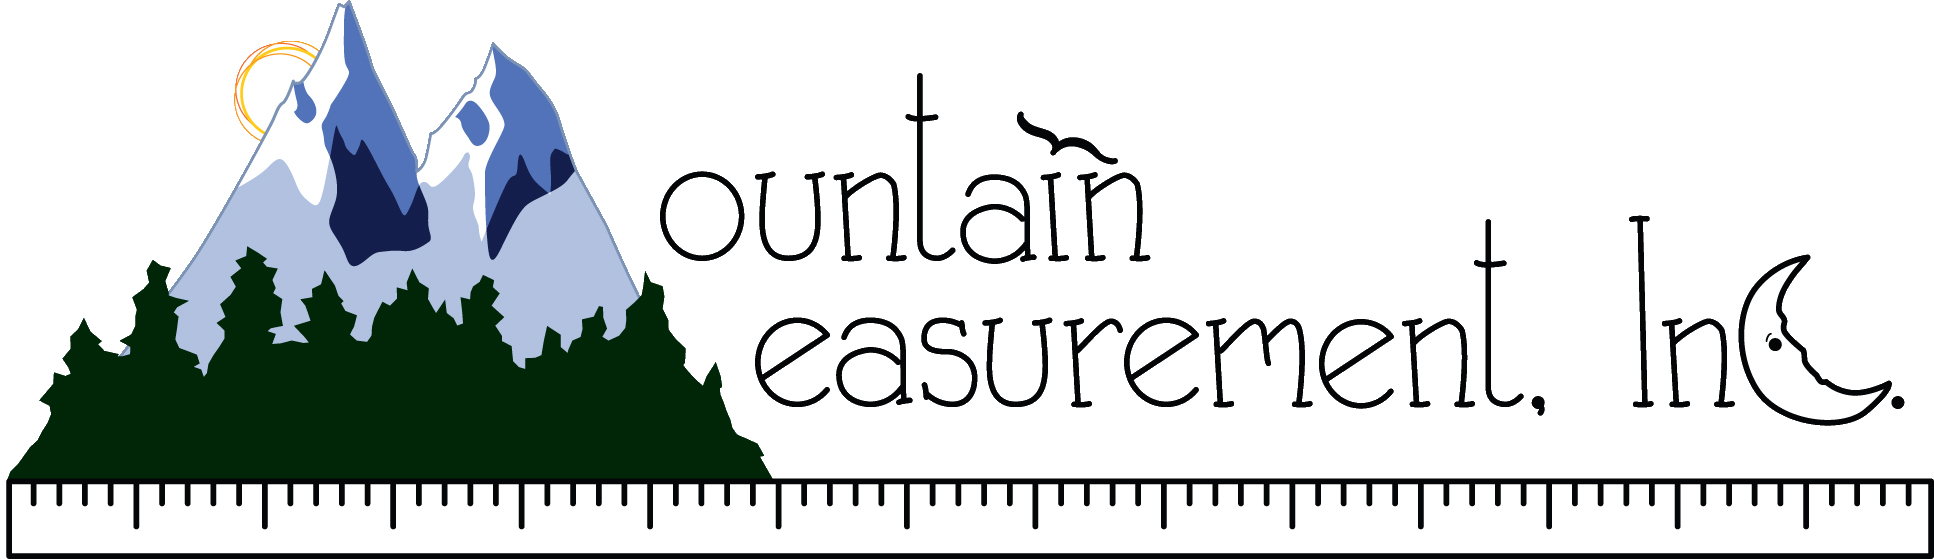 Mountain Measurement